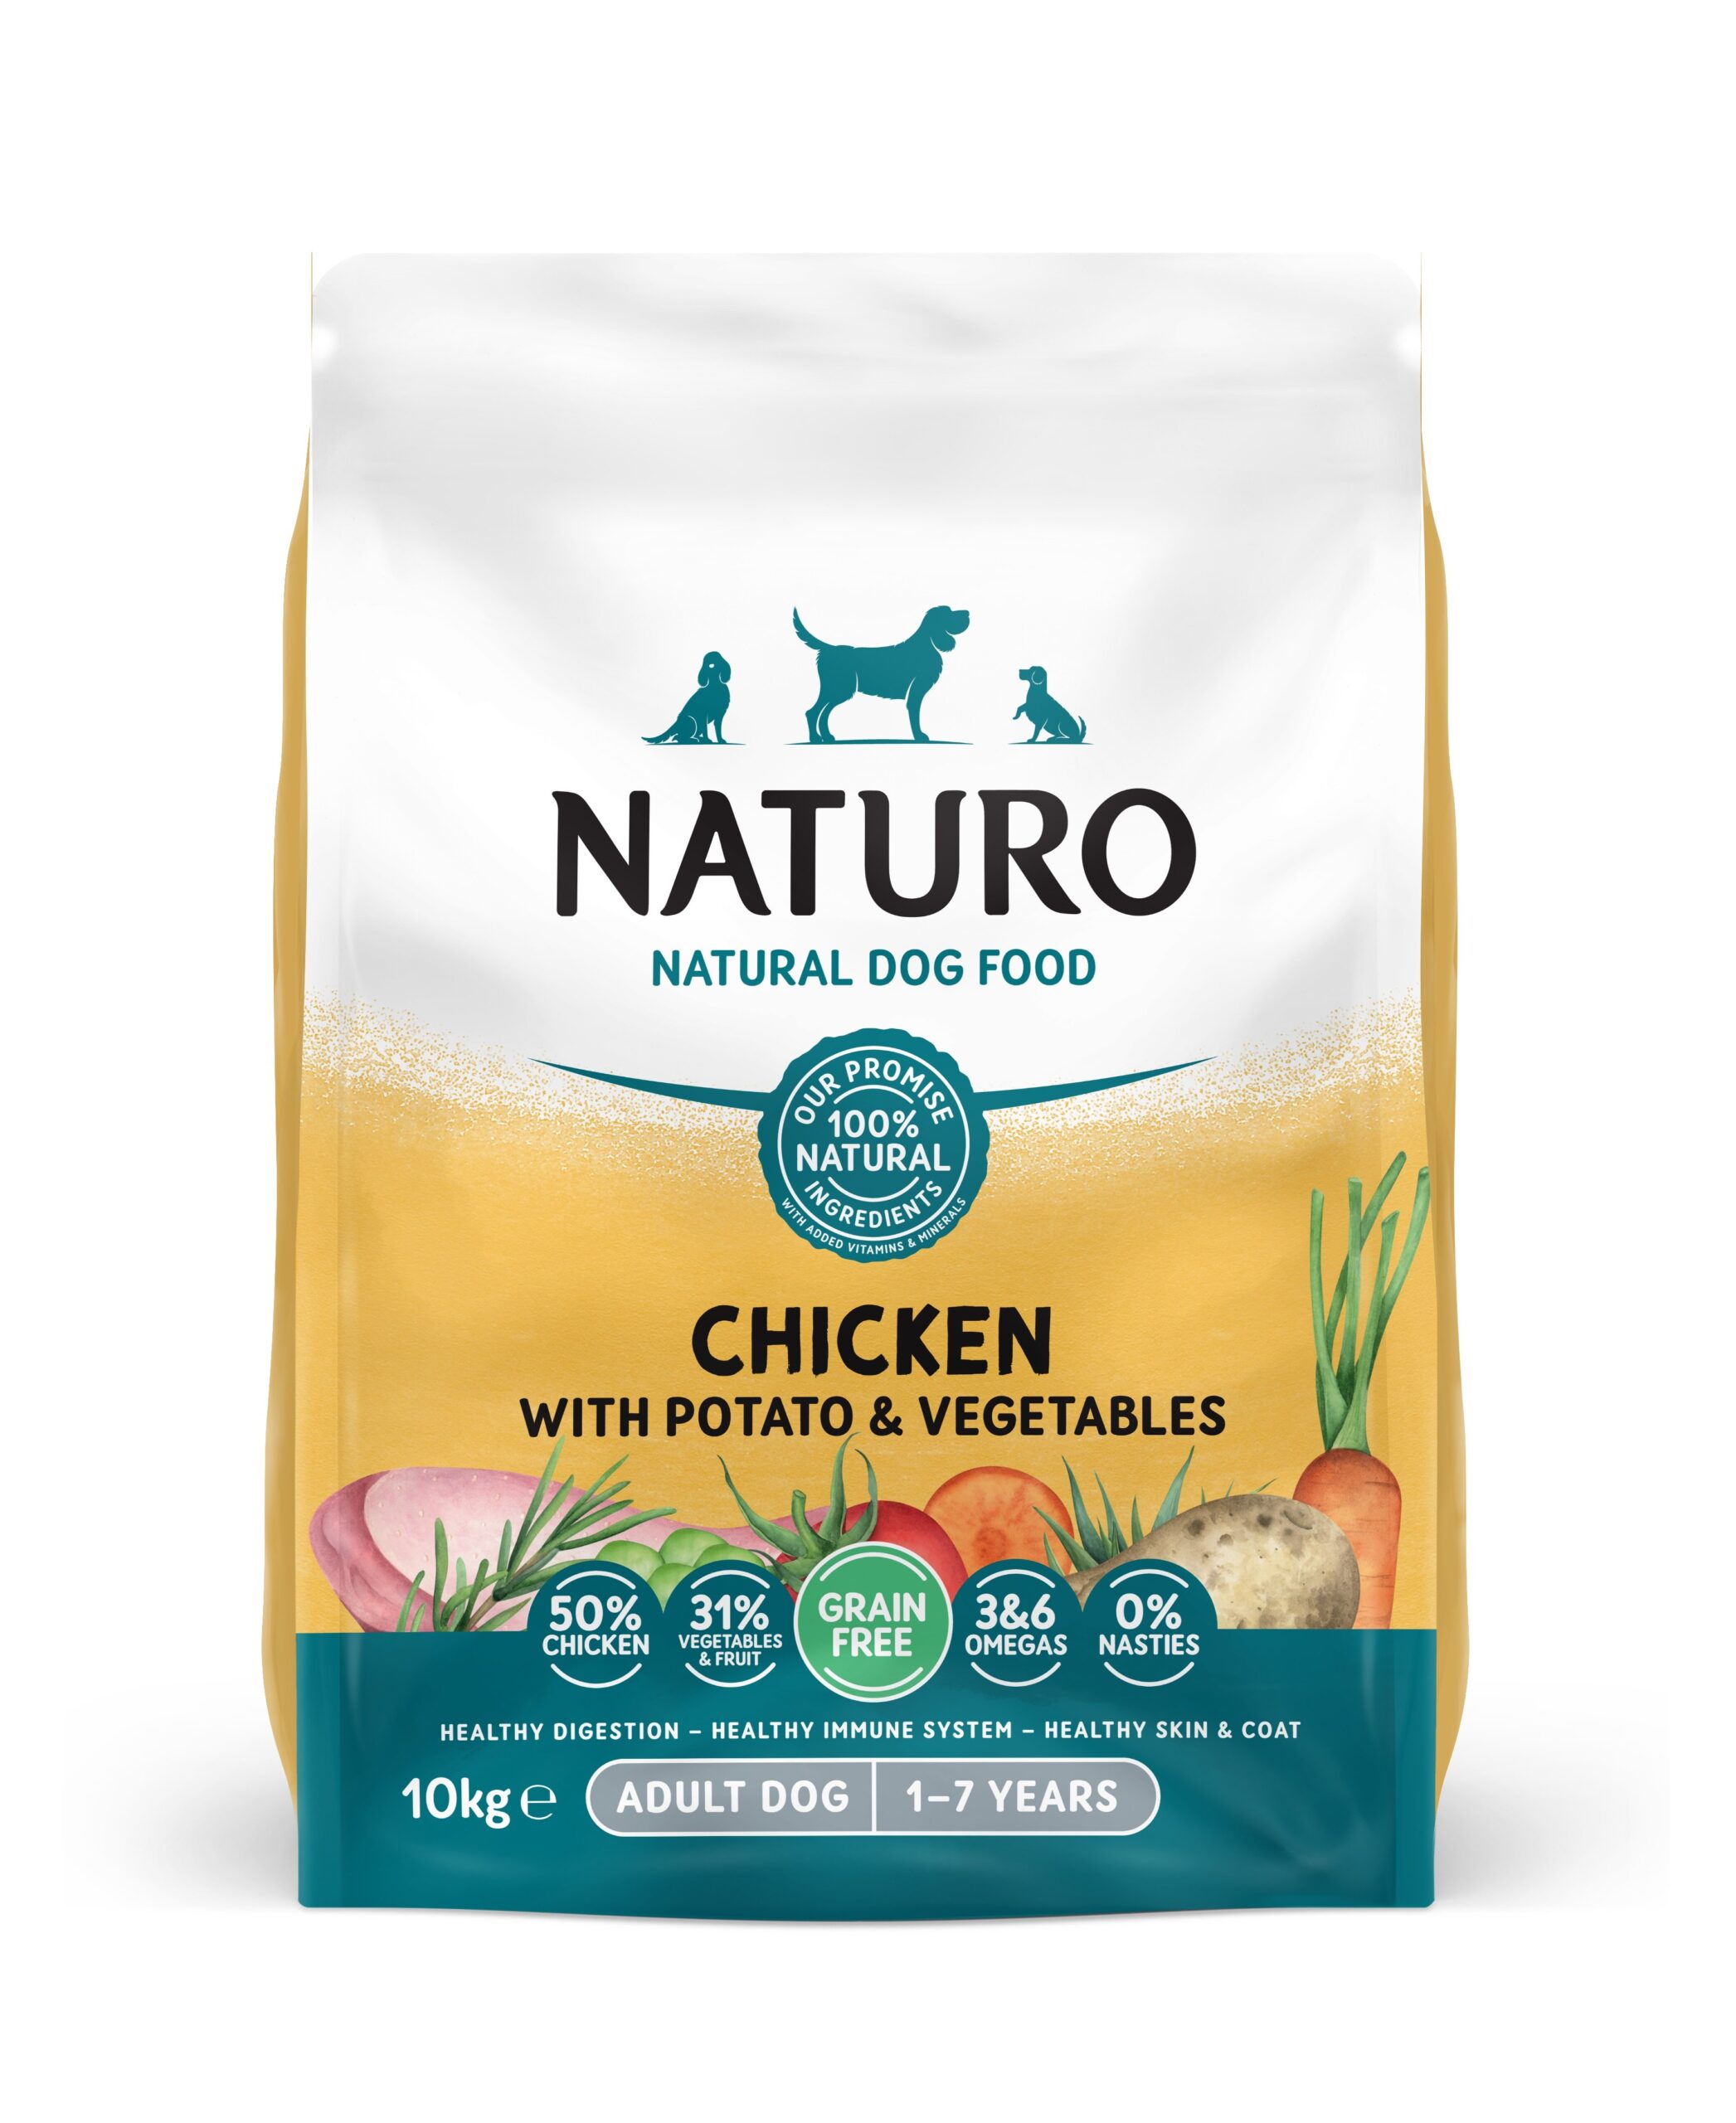 NATURO Chicken with potato and Veg. Grain free.